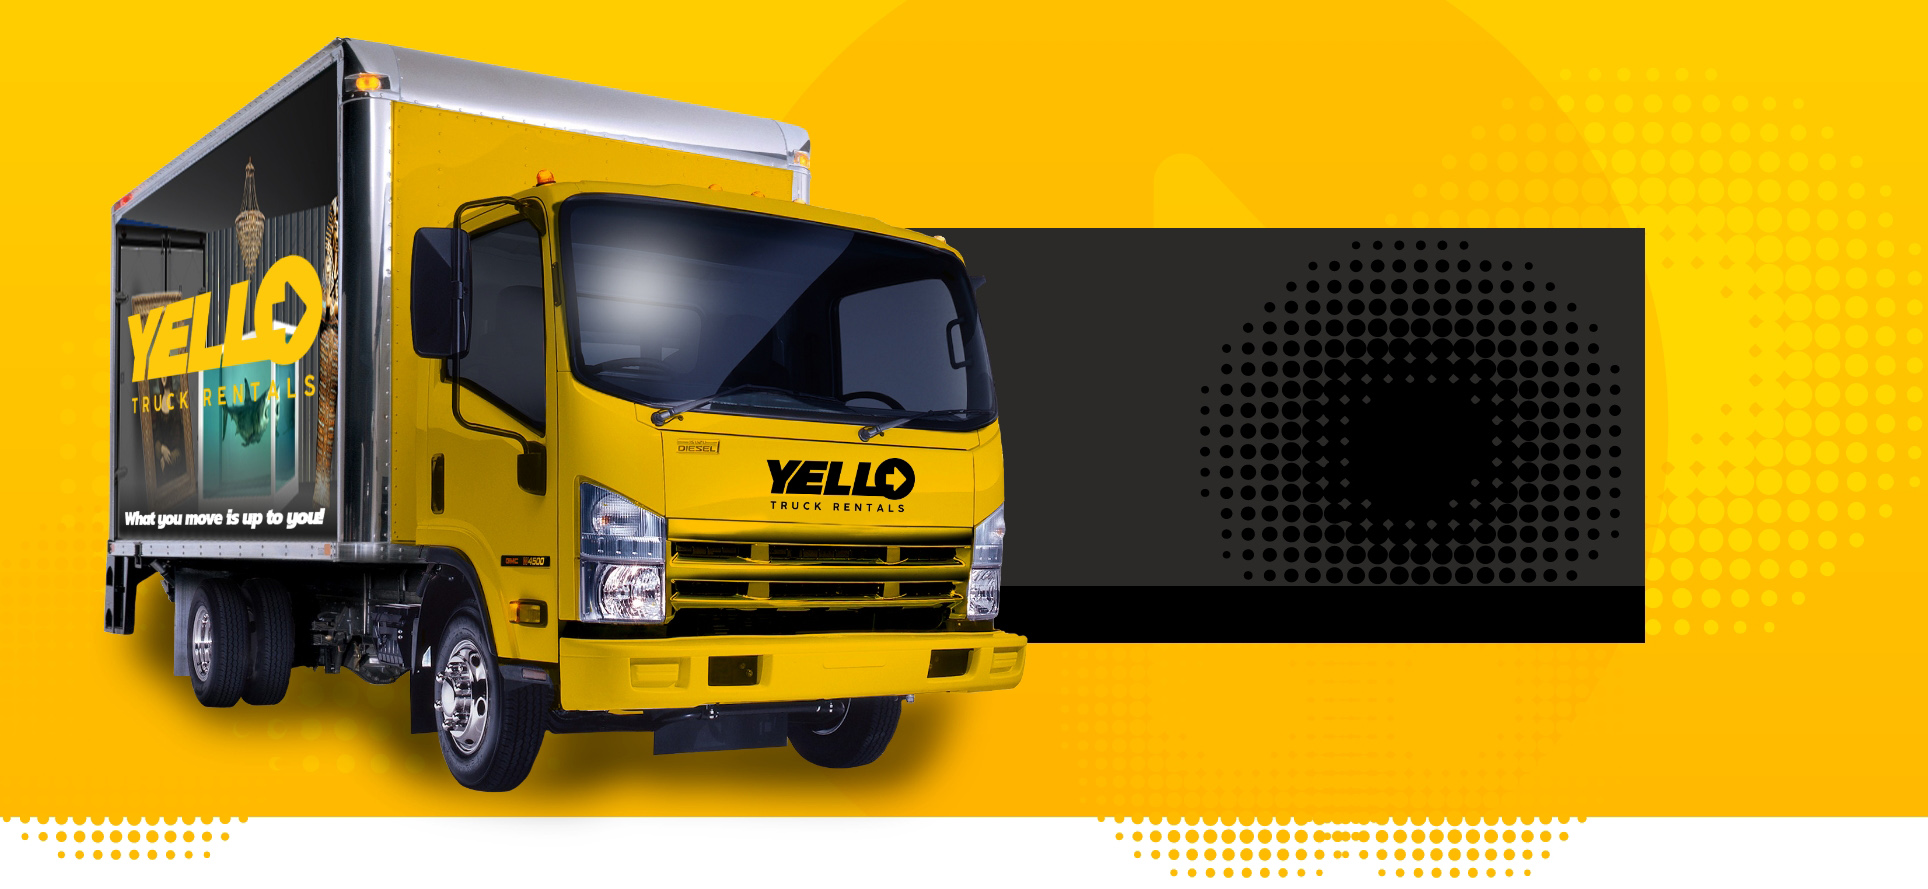 Yello Truck Rentals Fleet Banner